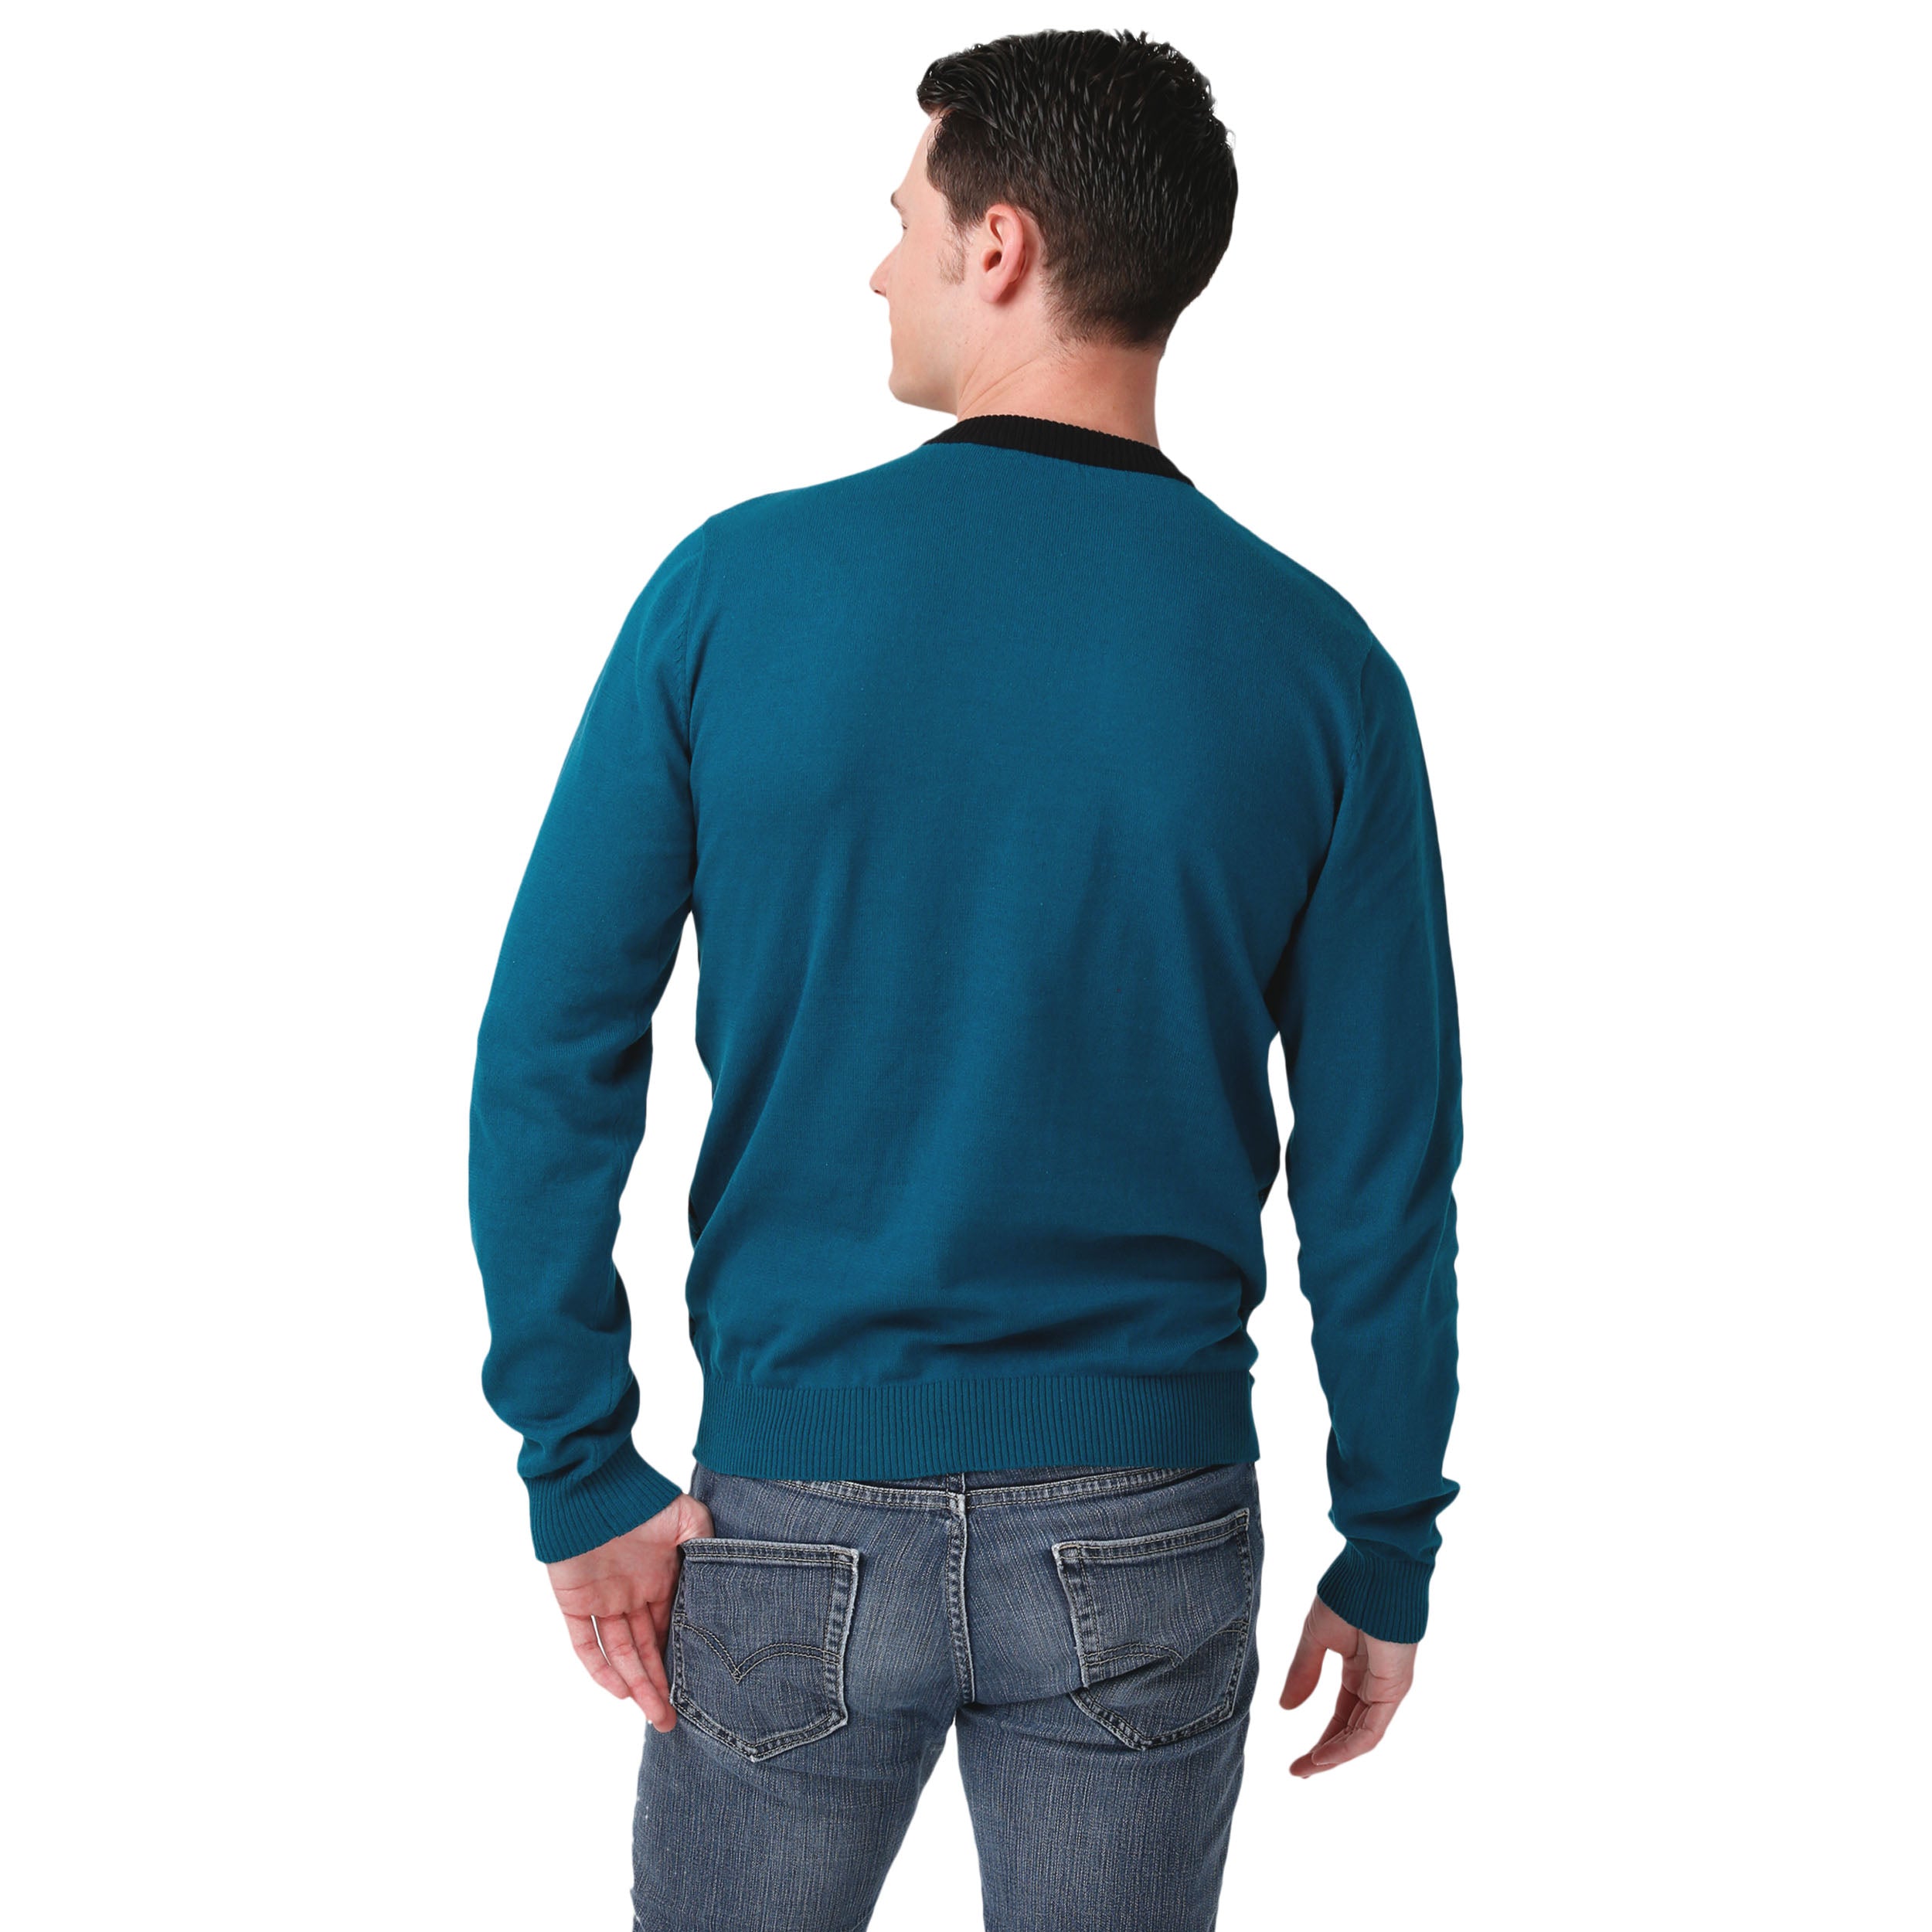 FOCO Men's NFL Big Logo Two Tone Knit Sweater